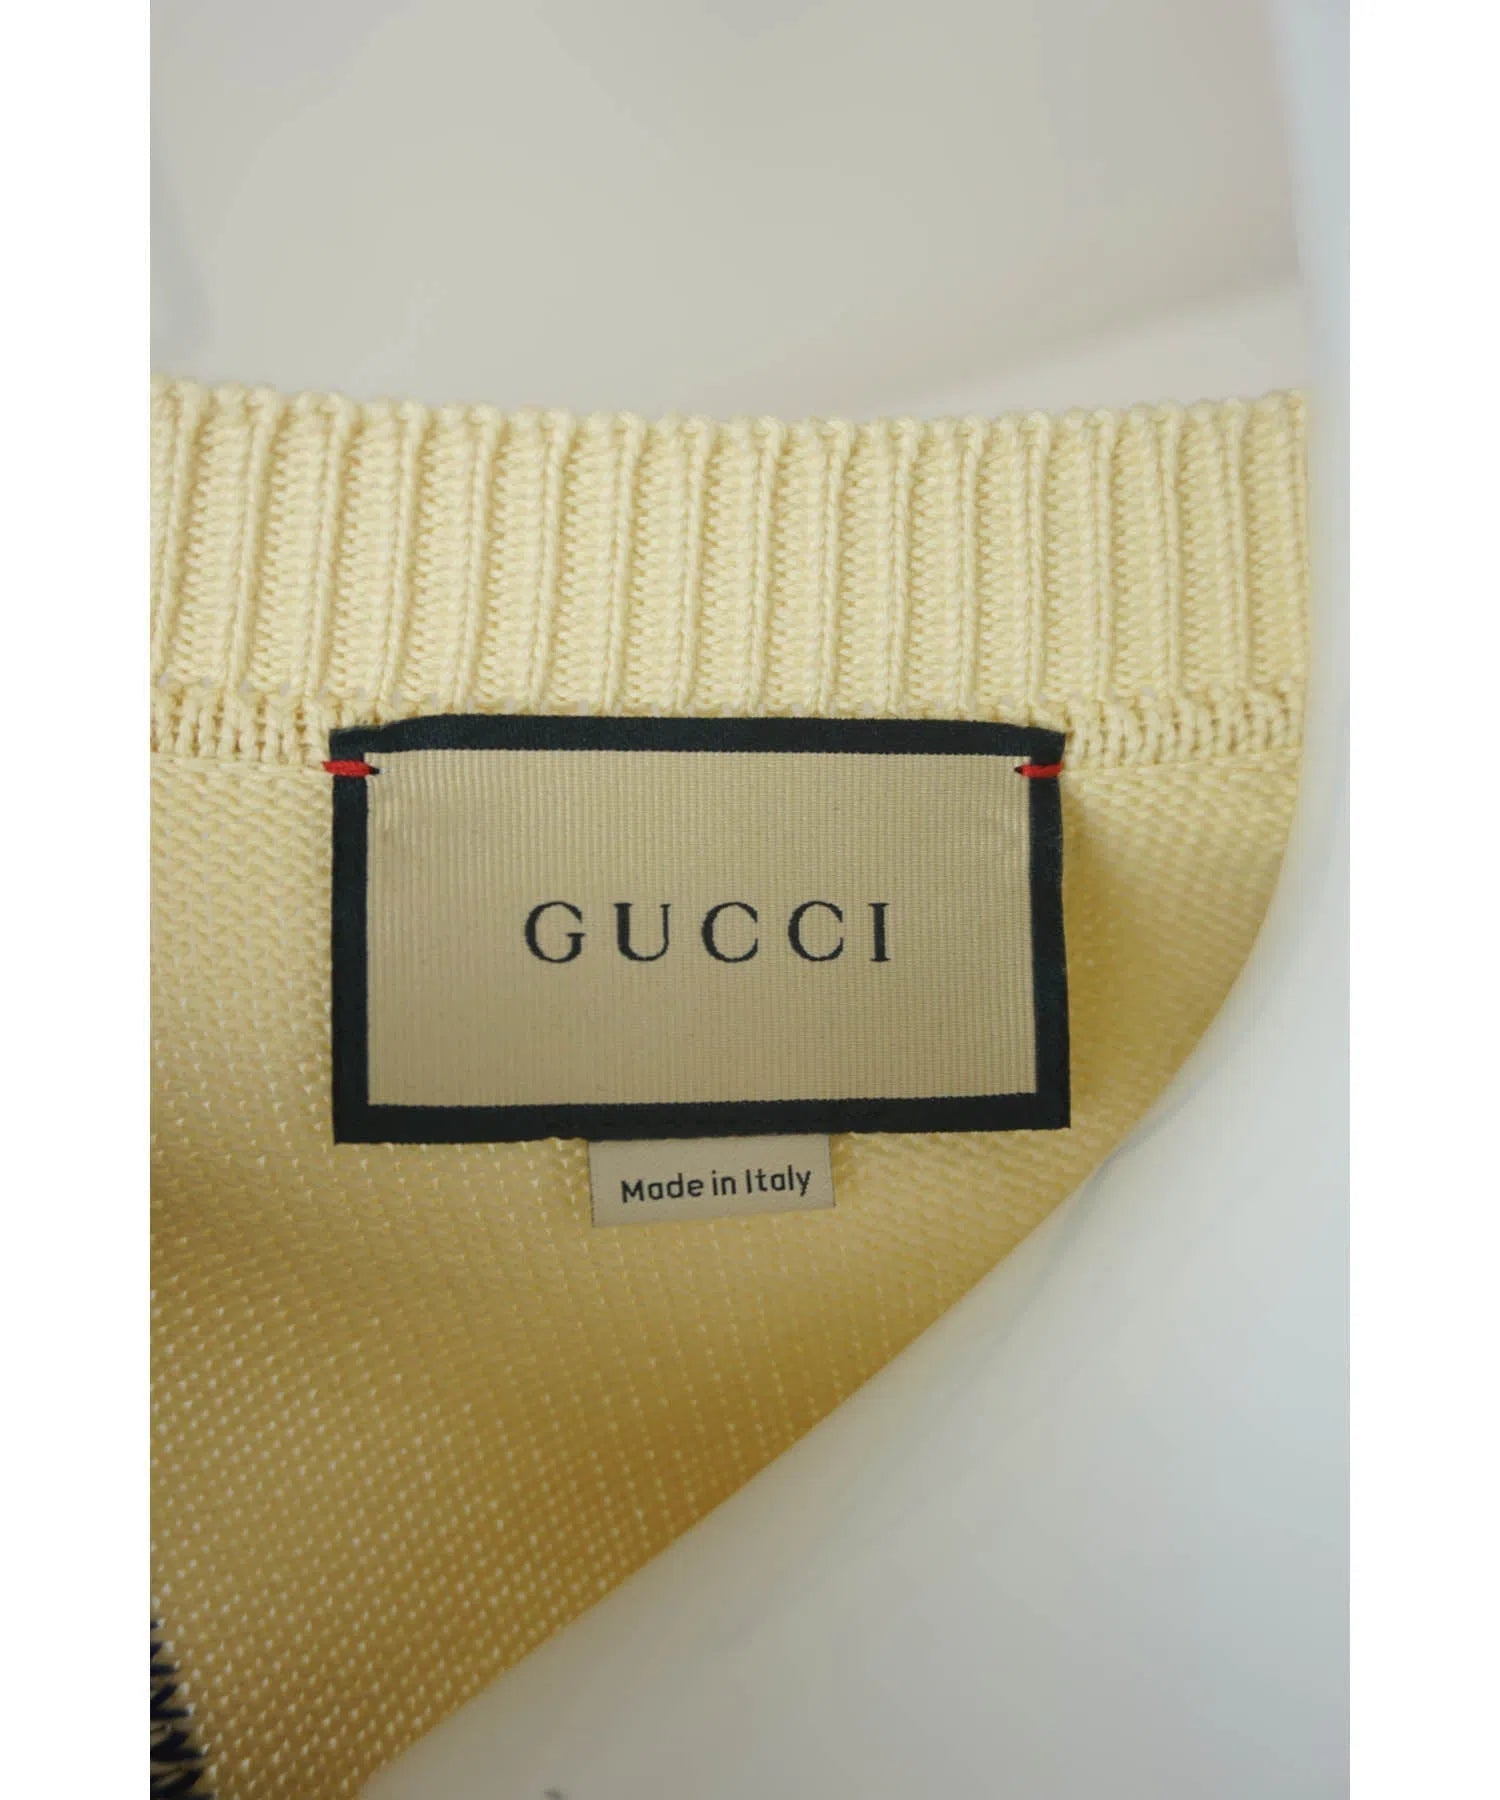 Gucci Men's Cotton Knit Striped GG Logo Cardigan Sweater